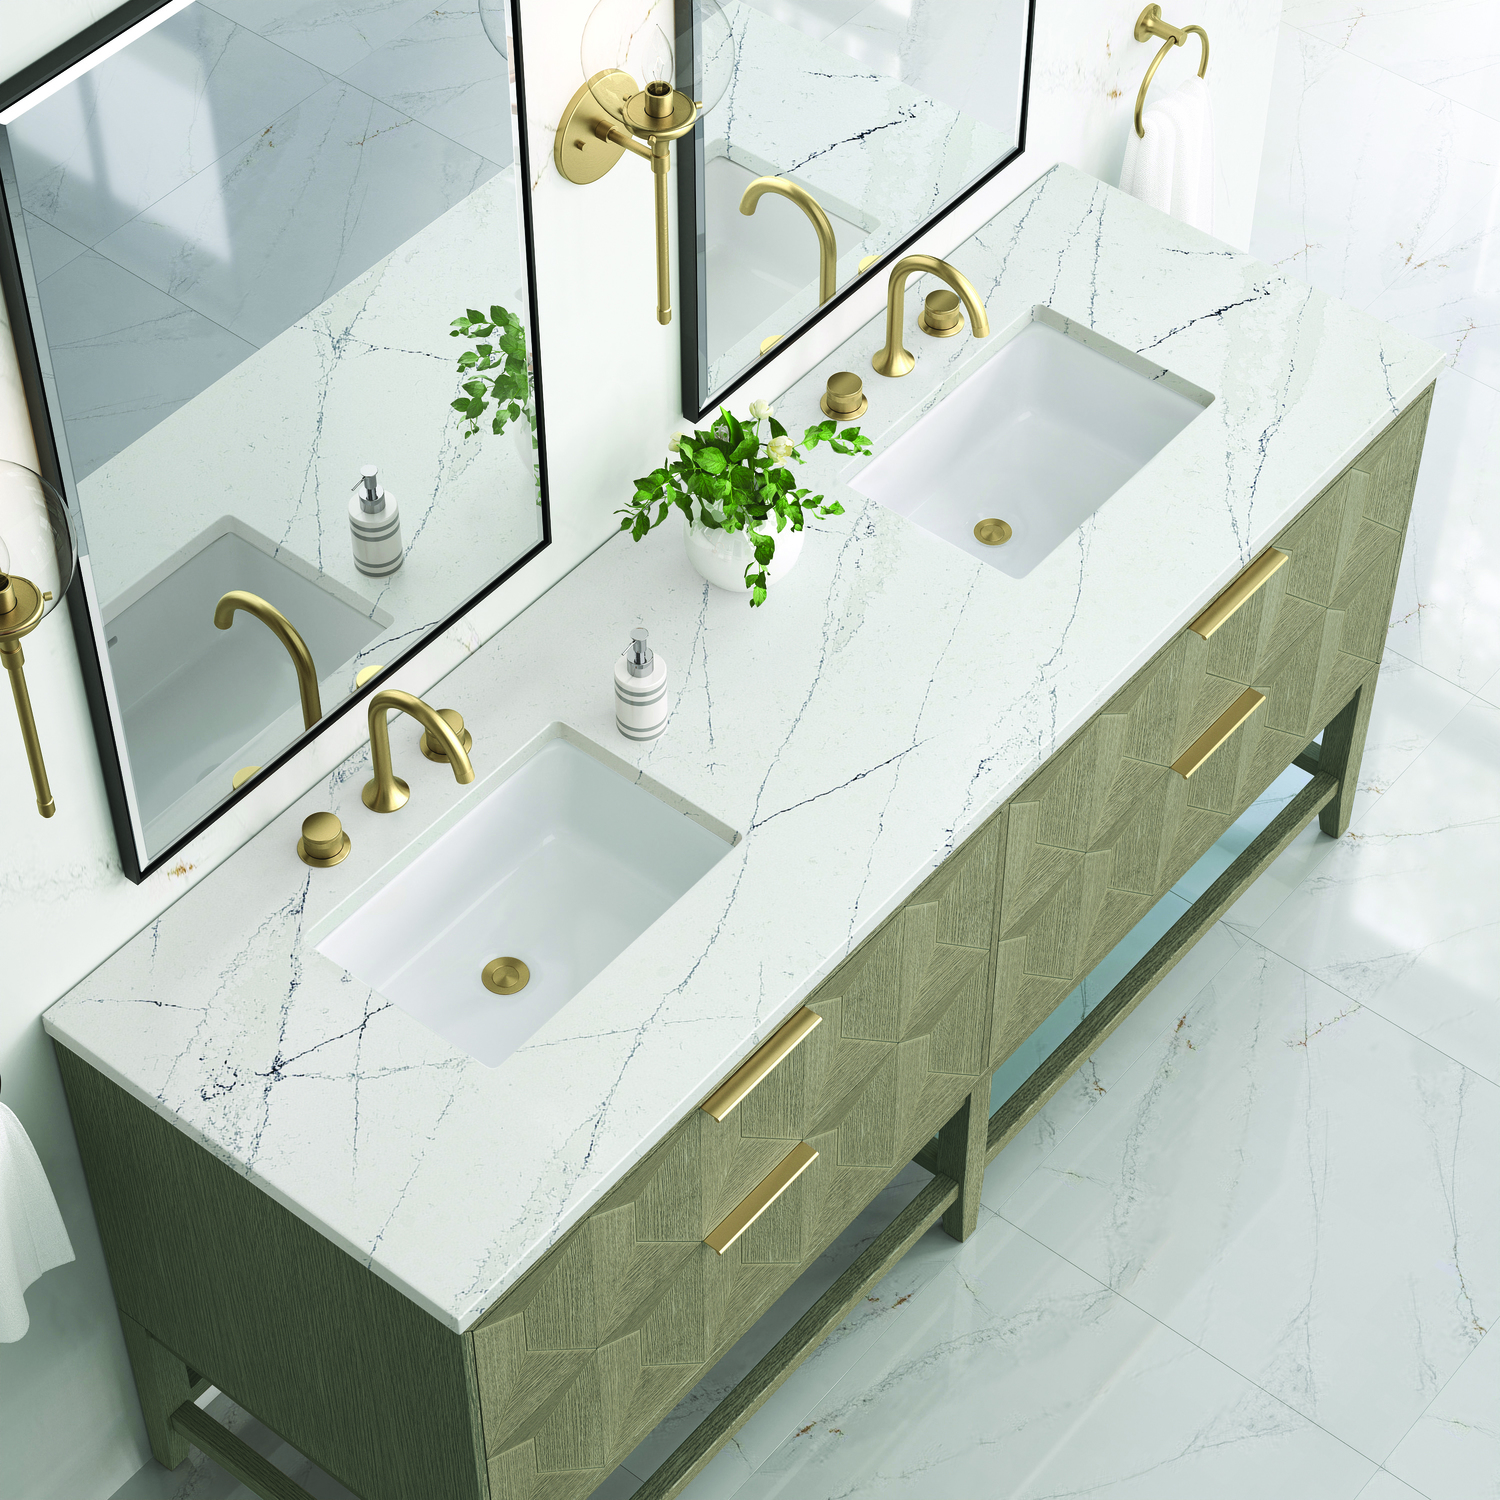 30 inch bathroom cabinet James Martin Vanity Pebble Oak Modern